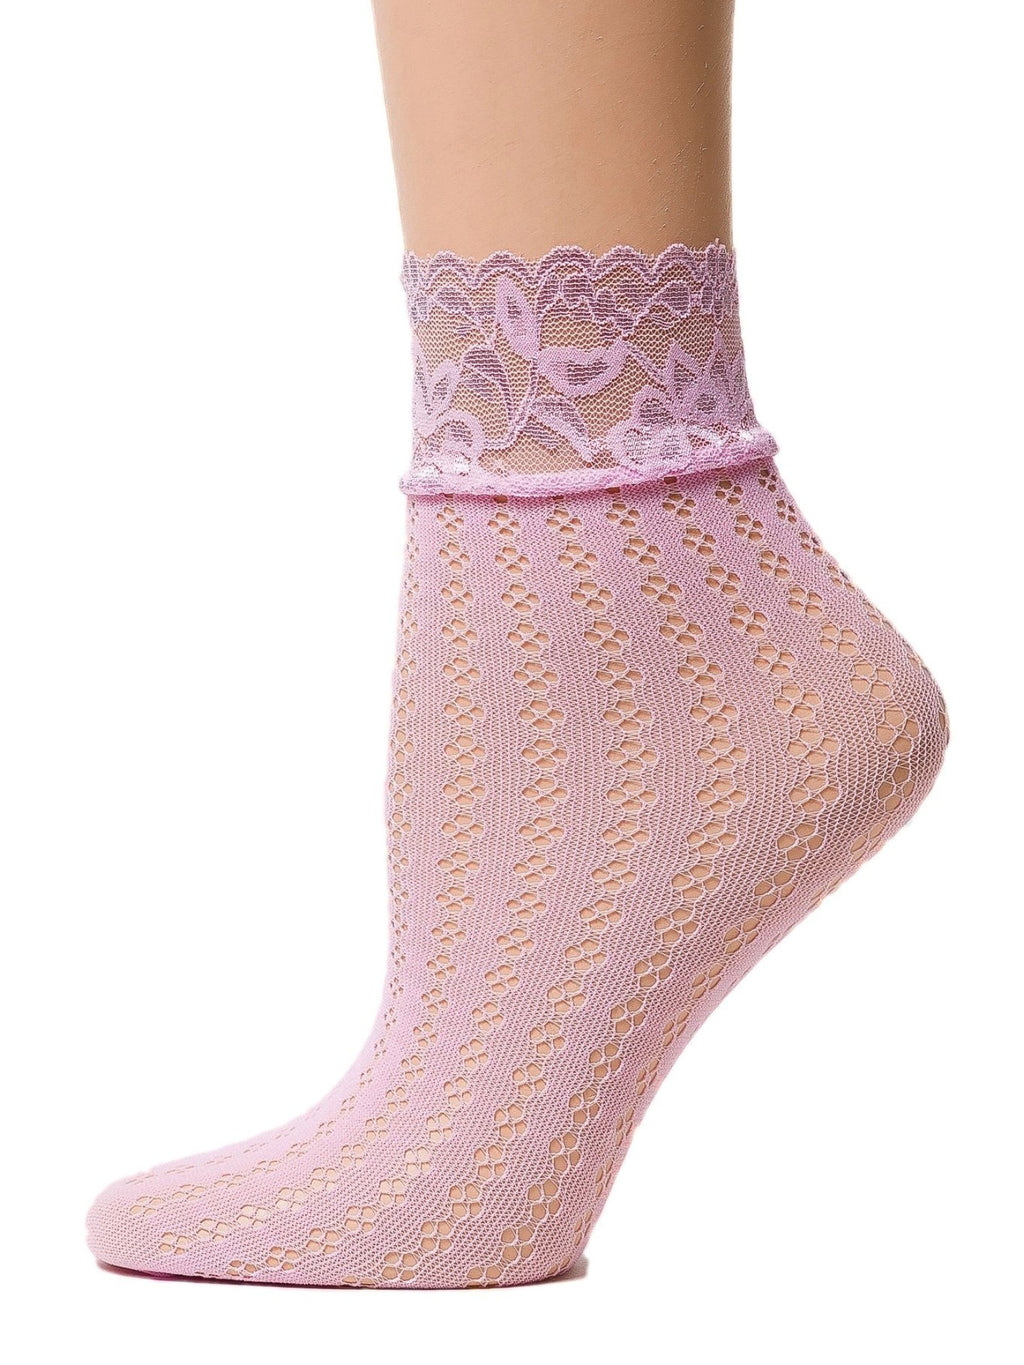 Mushy Pink Sheer Socks - Global Trendz Fashion®